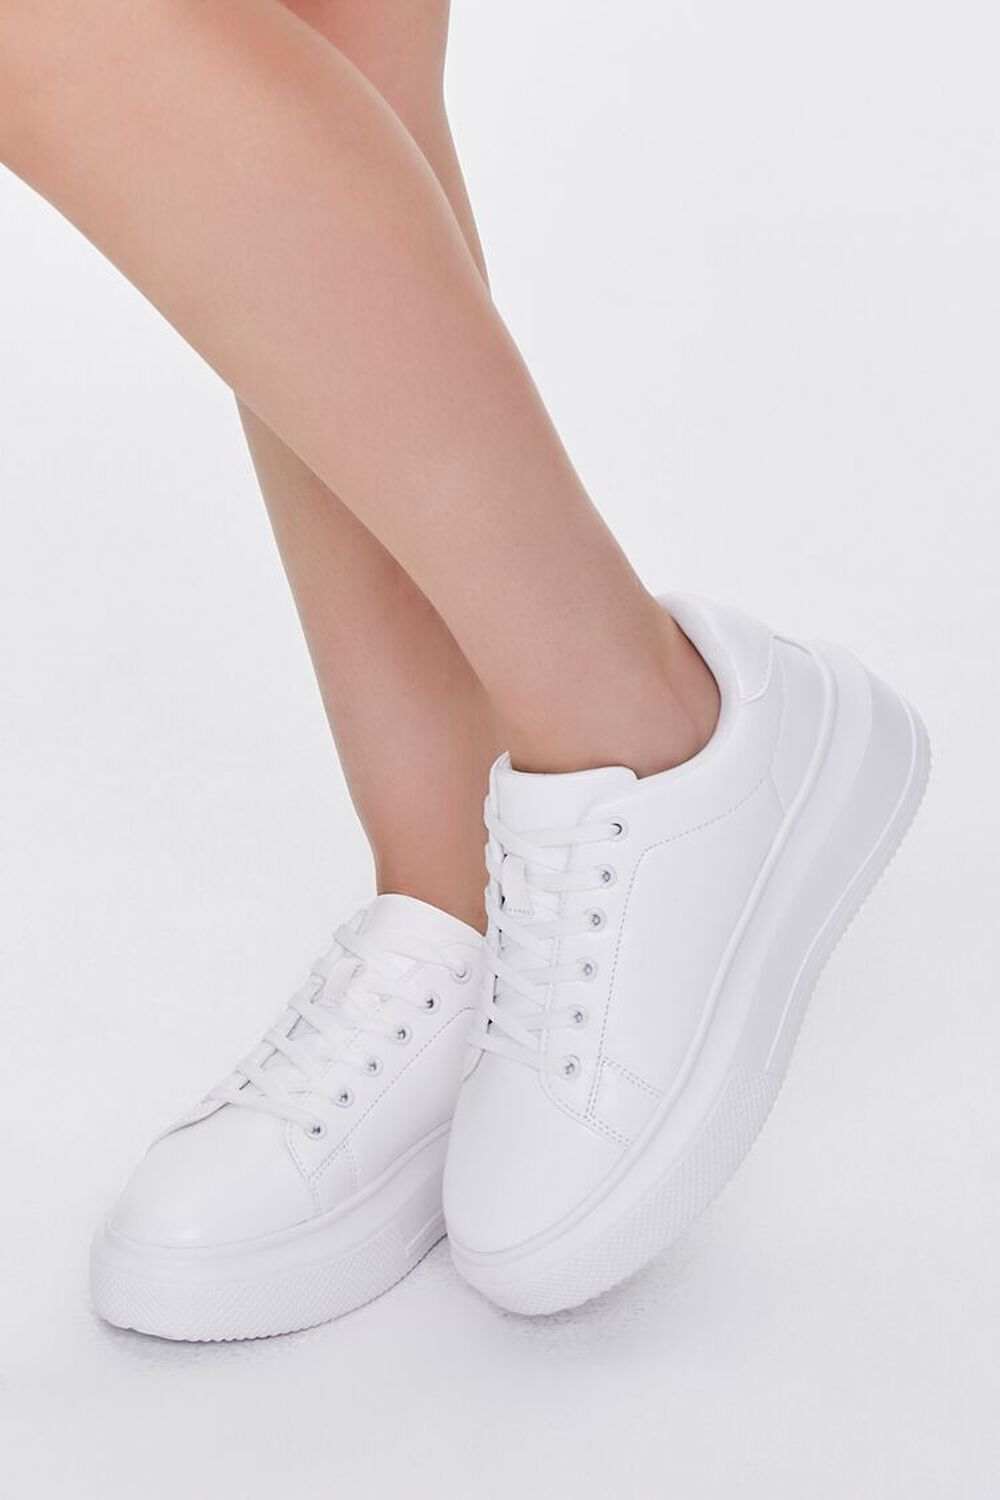 WHITE Low-Top Platform Sneakers, image 1